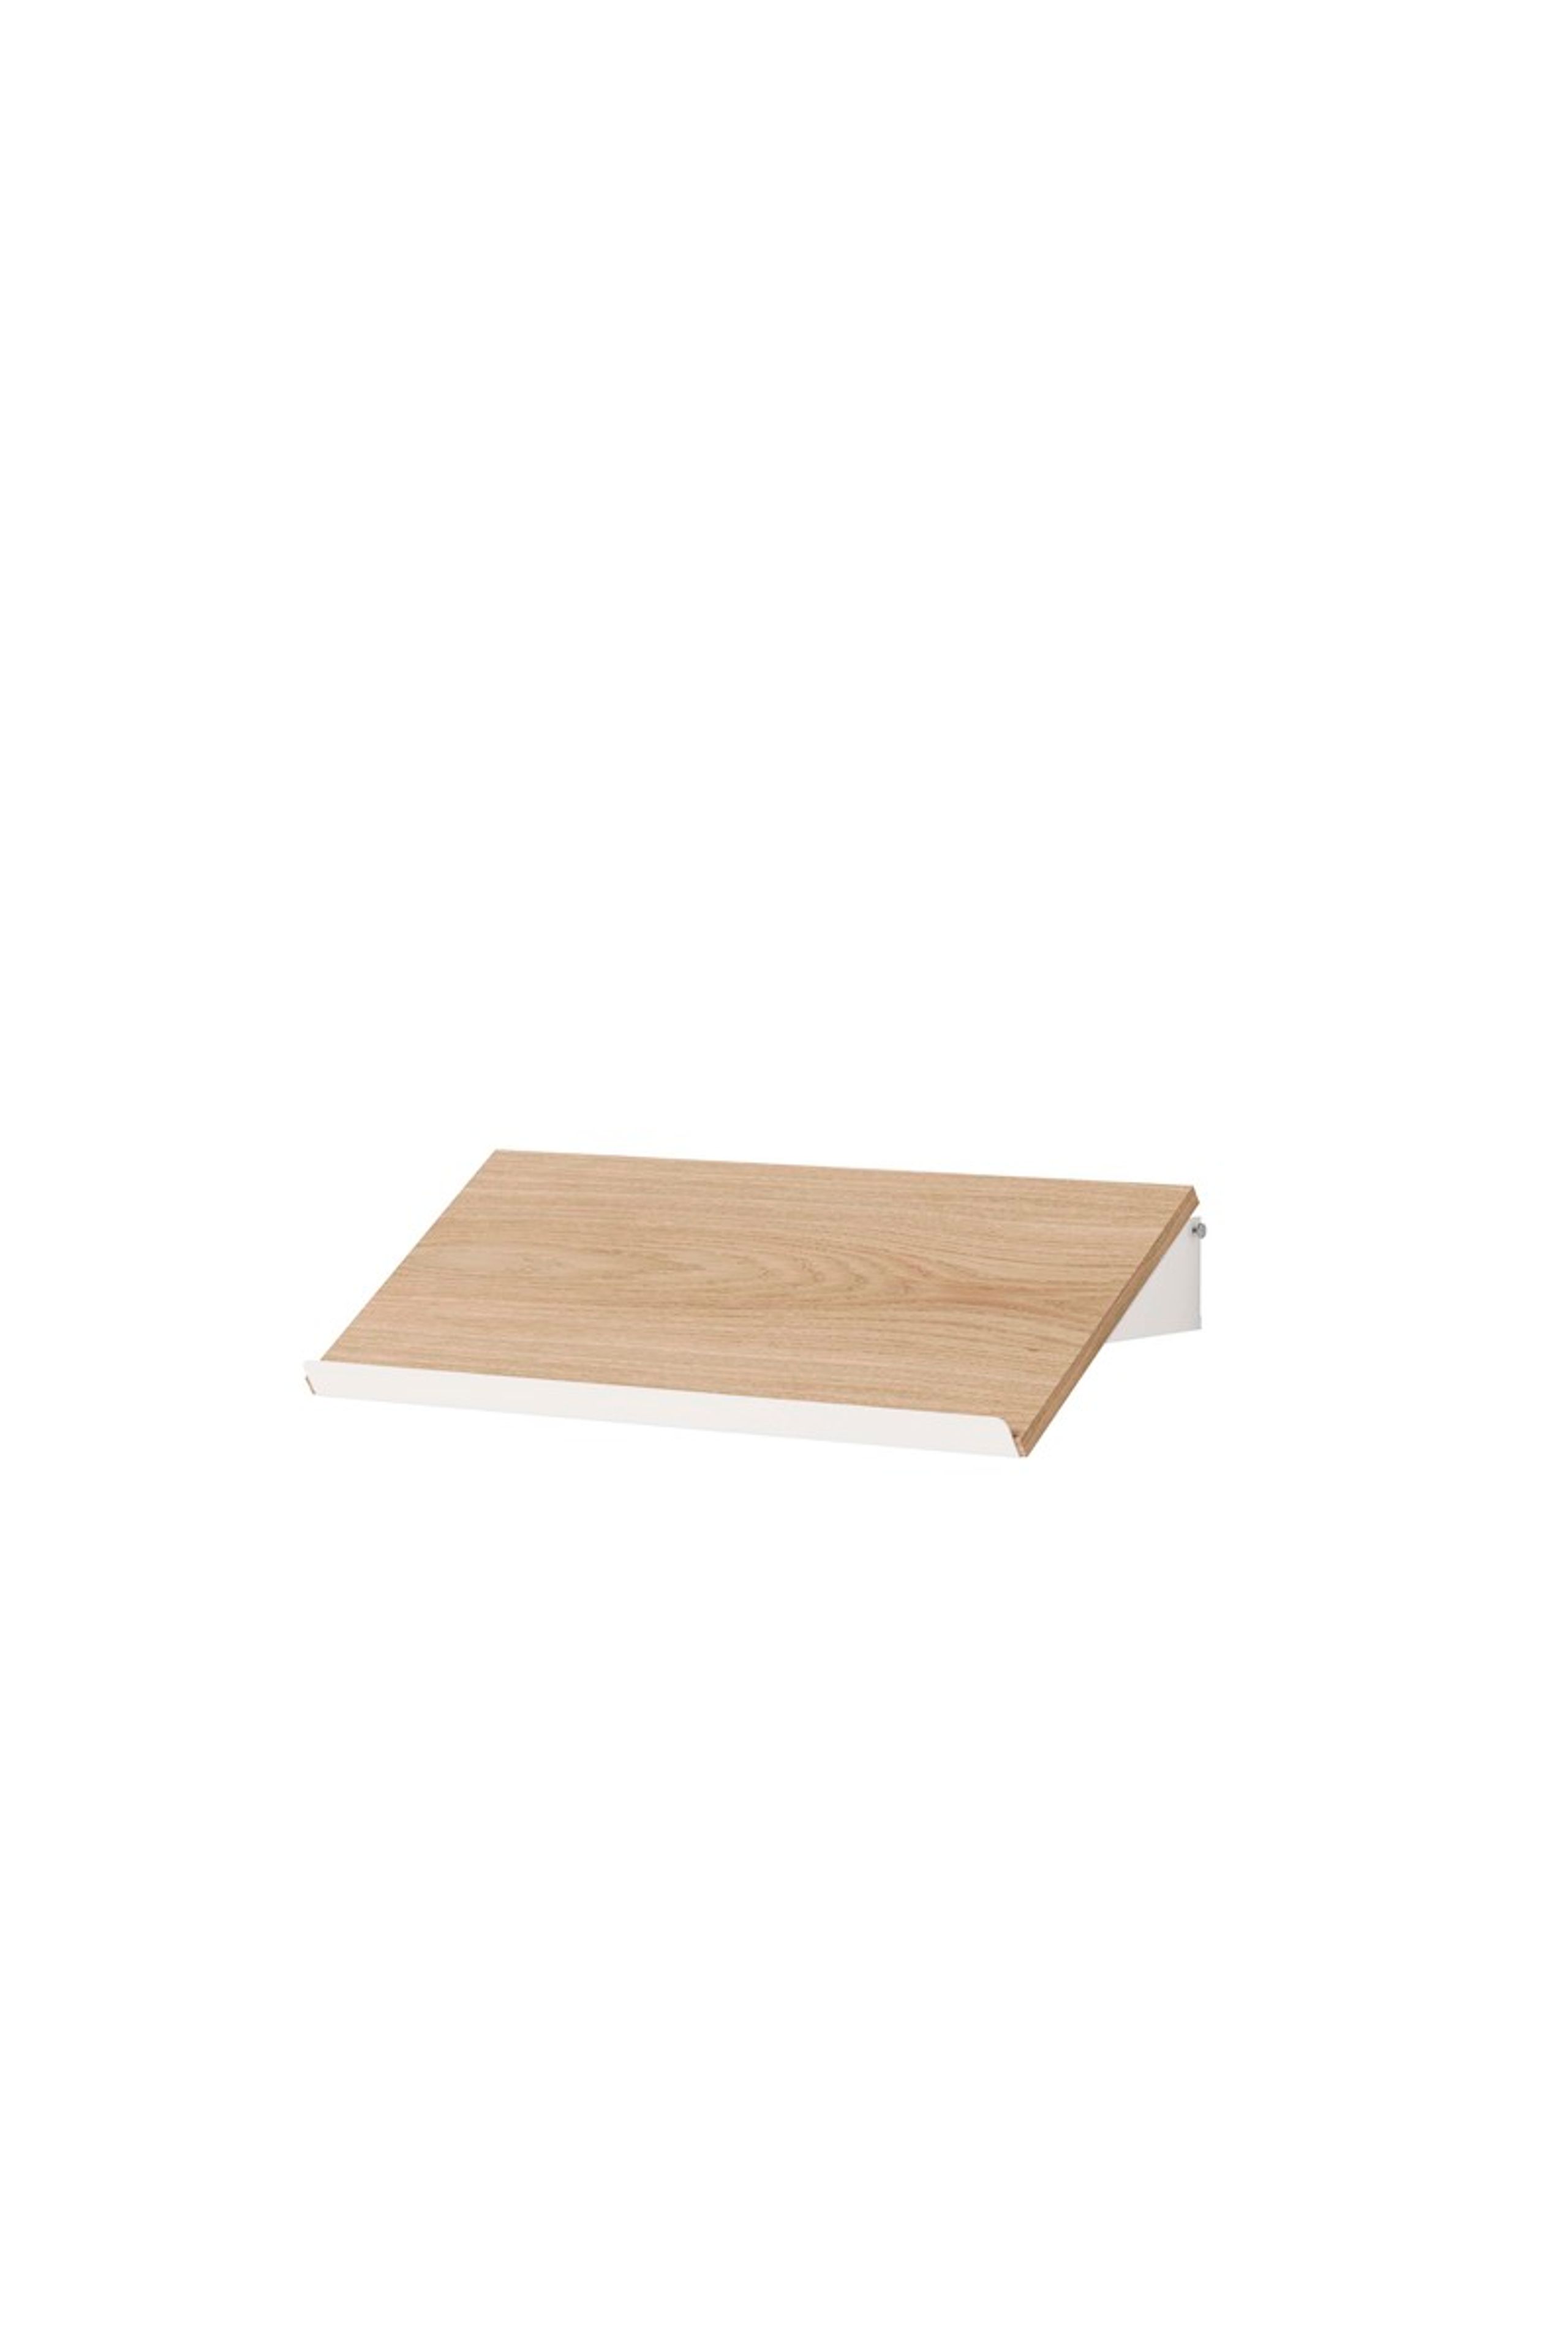 New Works - Plank - NEW WORKS SHELVING SYSTEM - New Works Magazine Shelf Kit - Oak / White